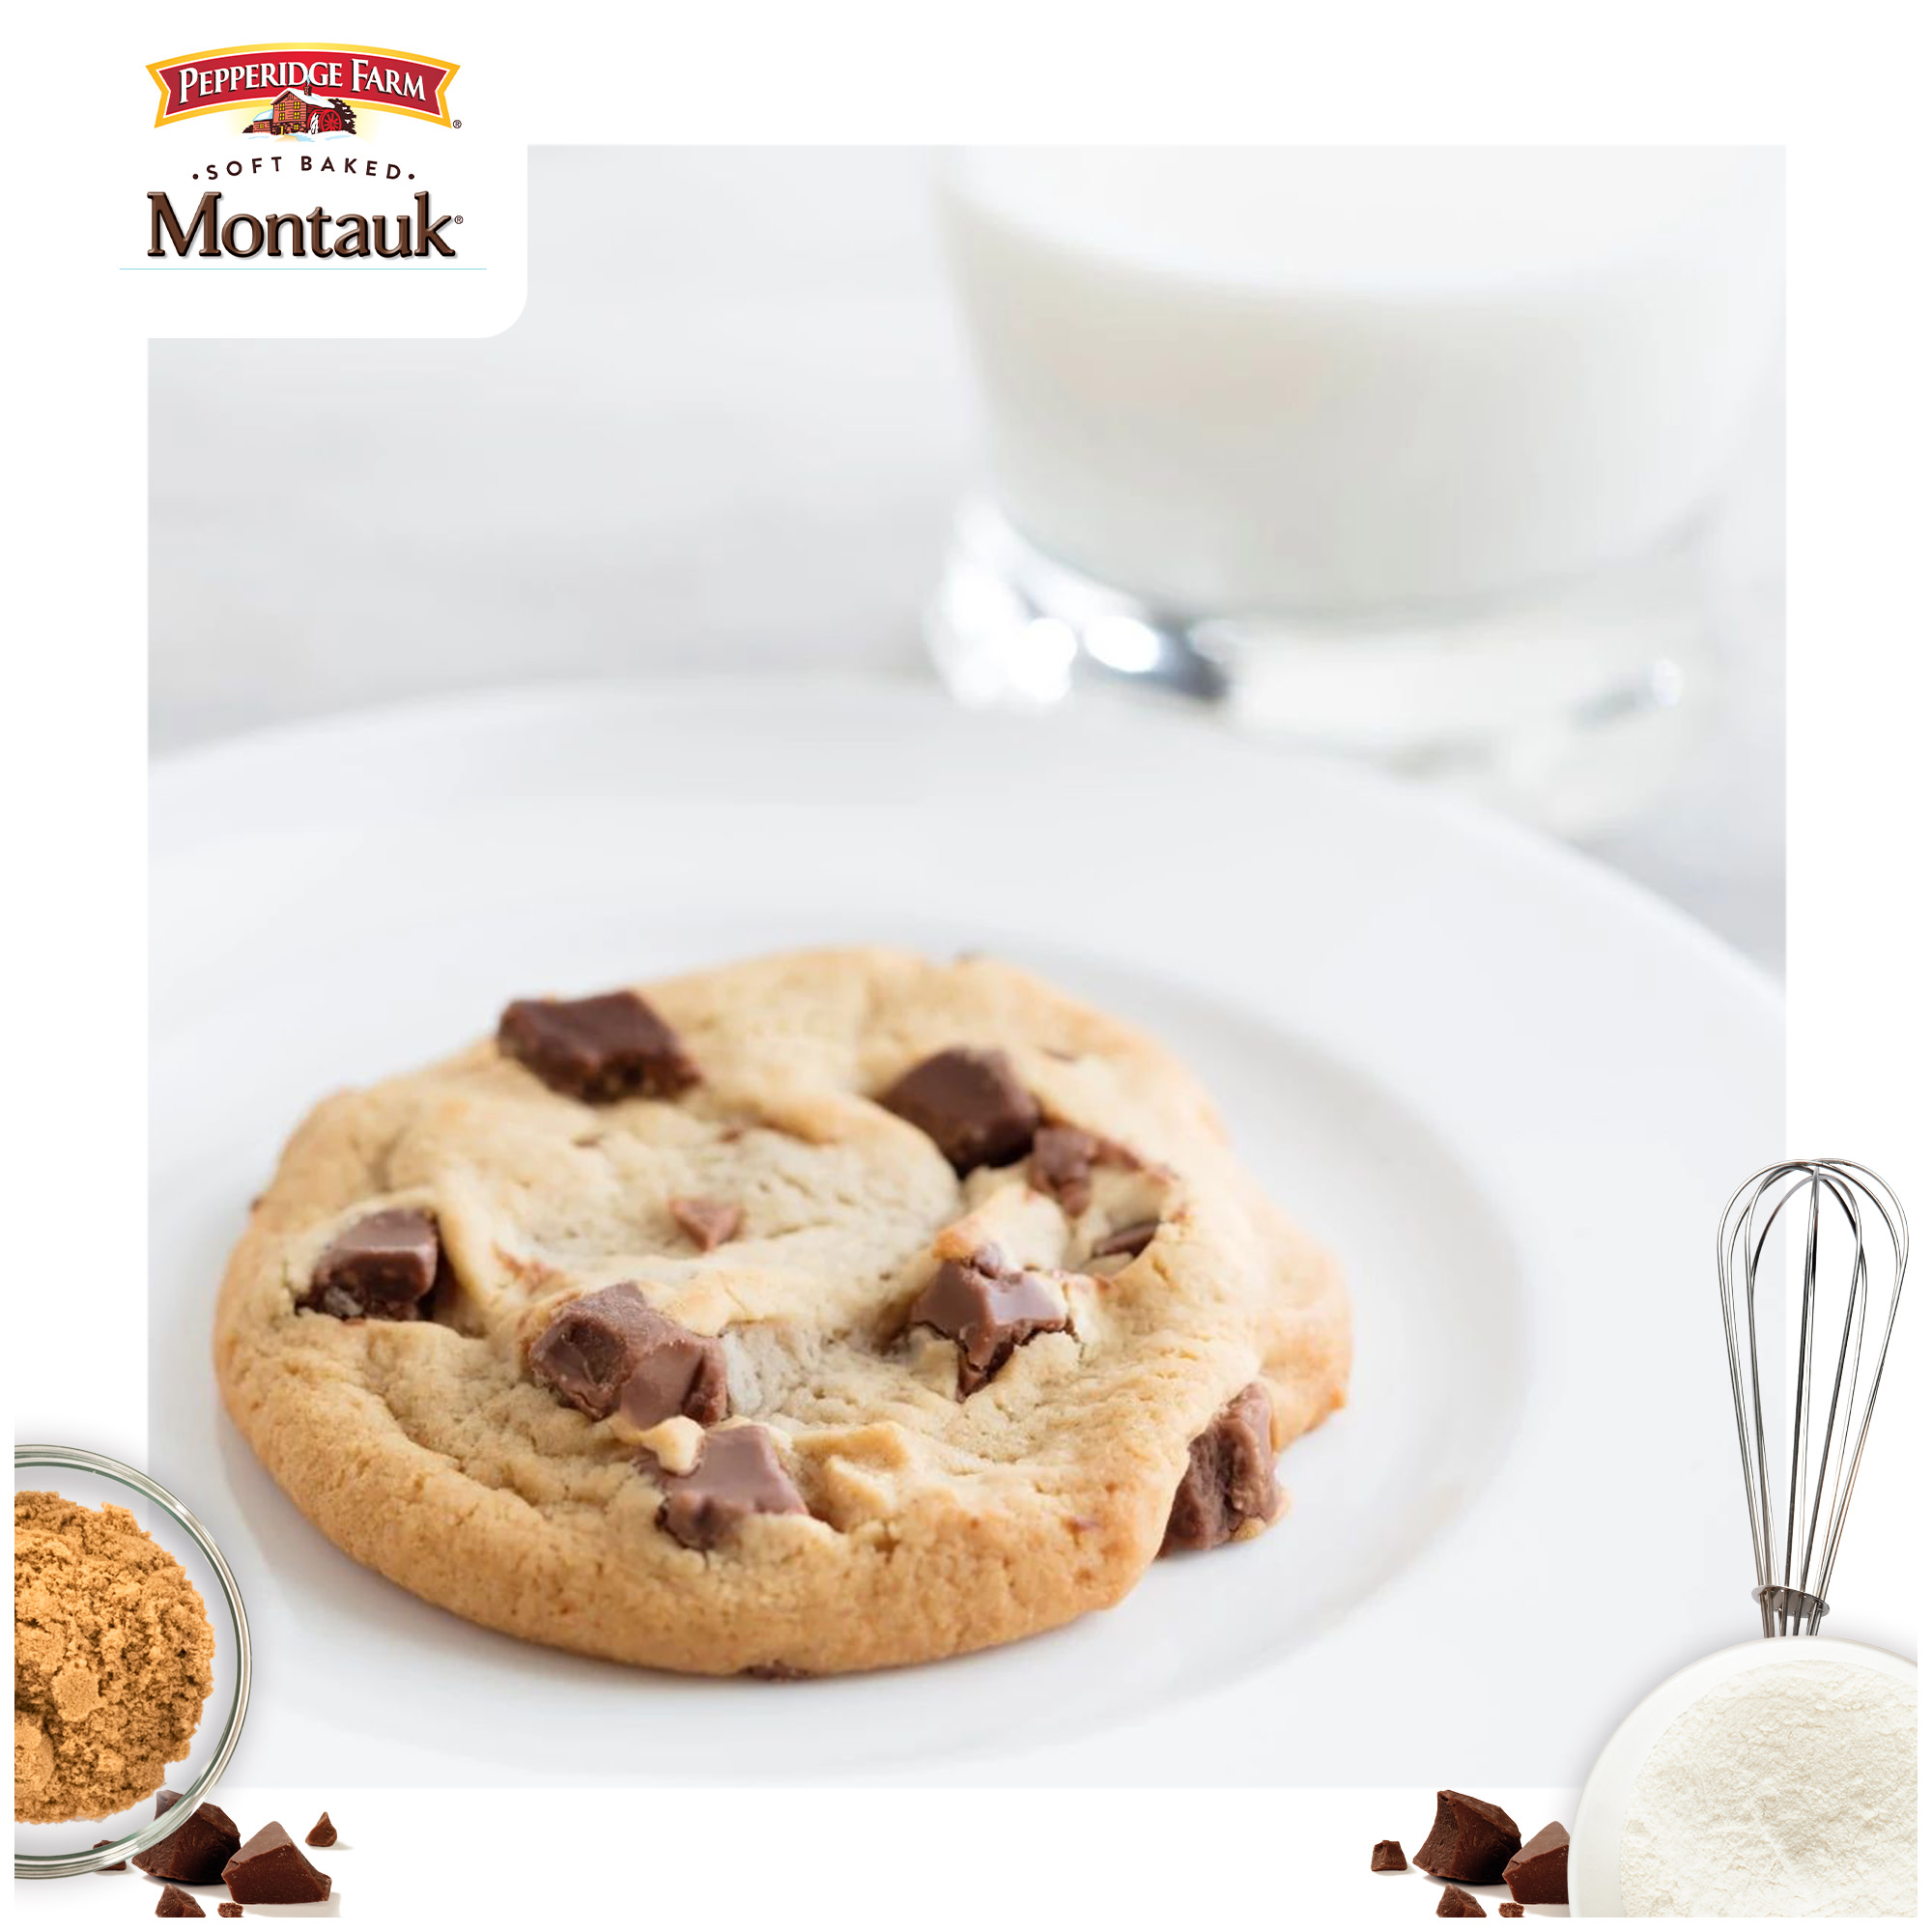 Pepperidge Farm Montauk Soft Baked Milk Chocolate Chunk Cookies, 8.6 oz Bag (8 Cookies) - image 3 of 9